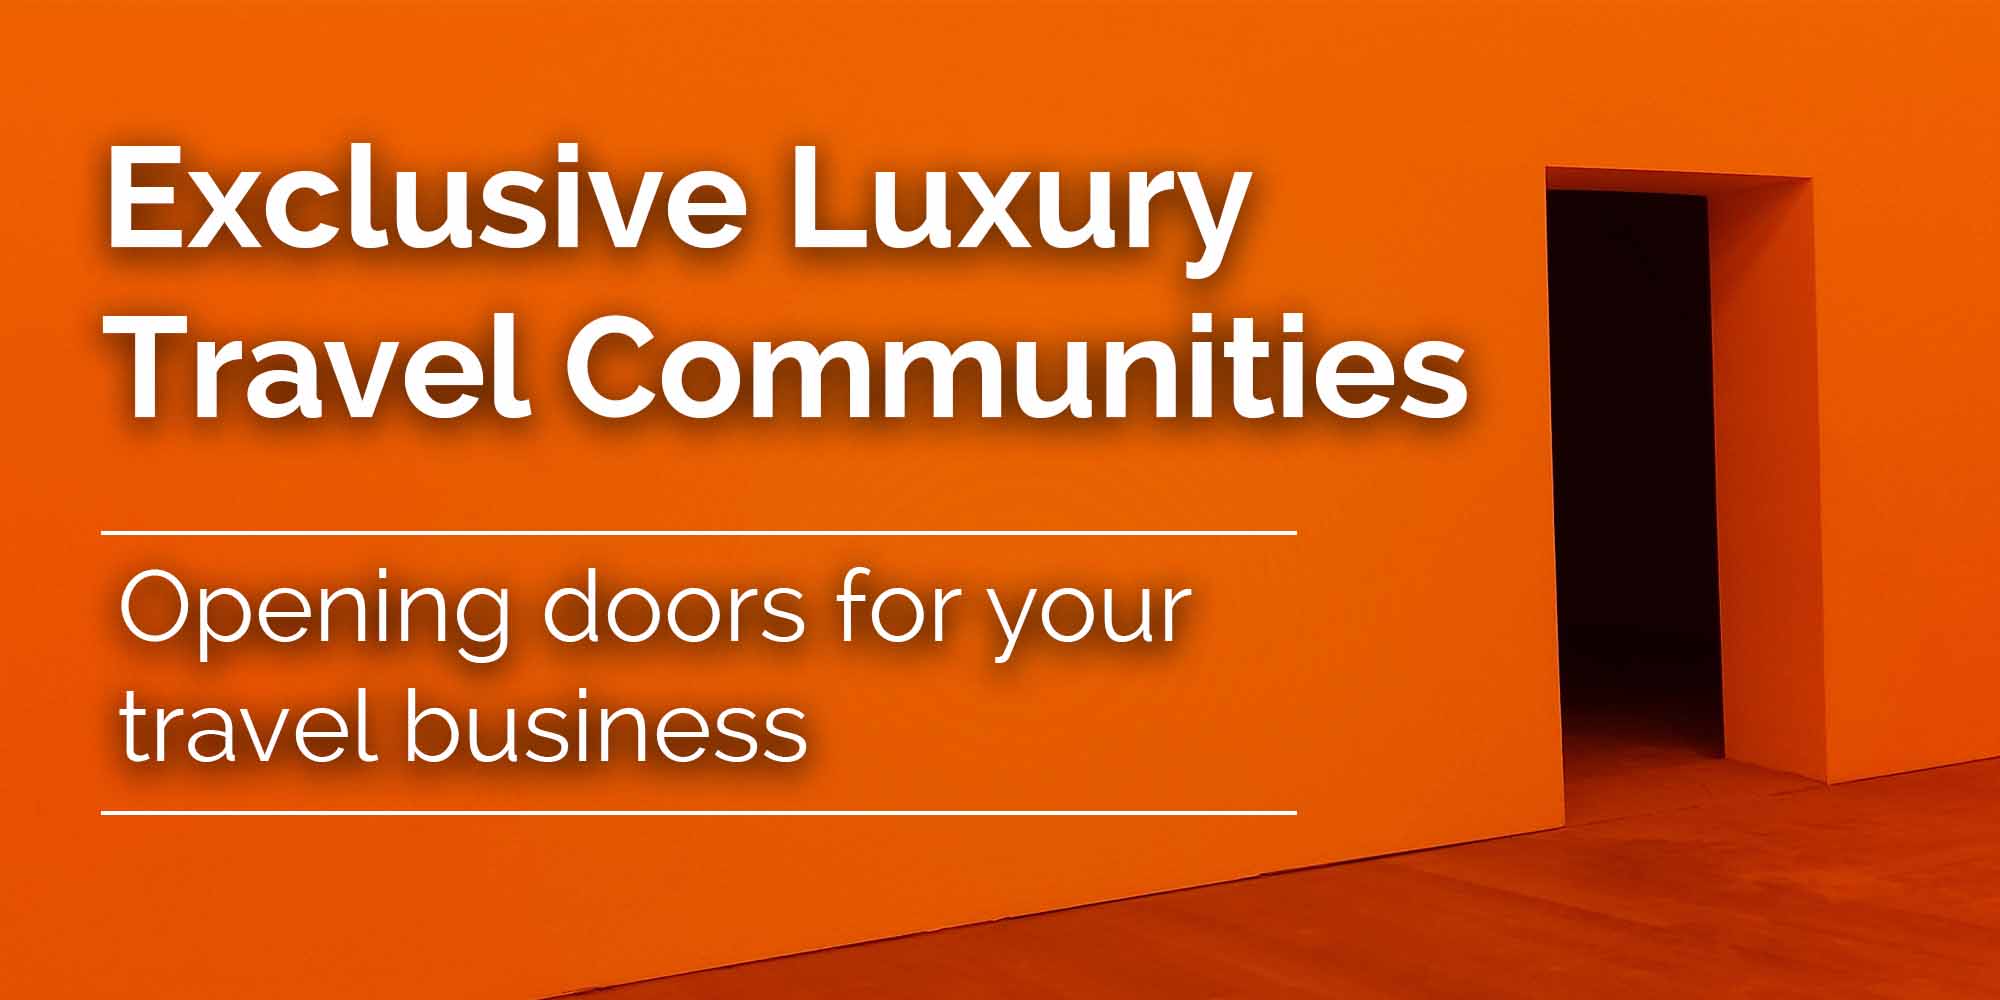 Exclusive luxury travel communities: opening doors for your travel business